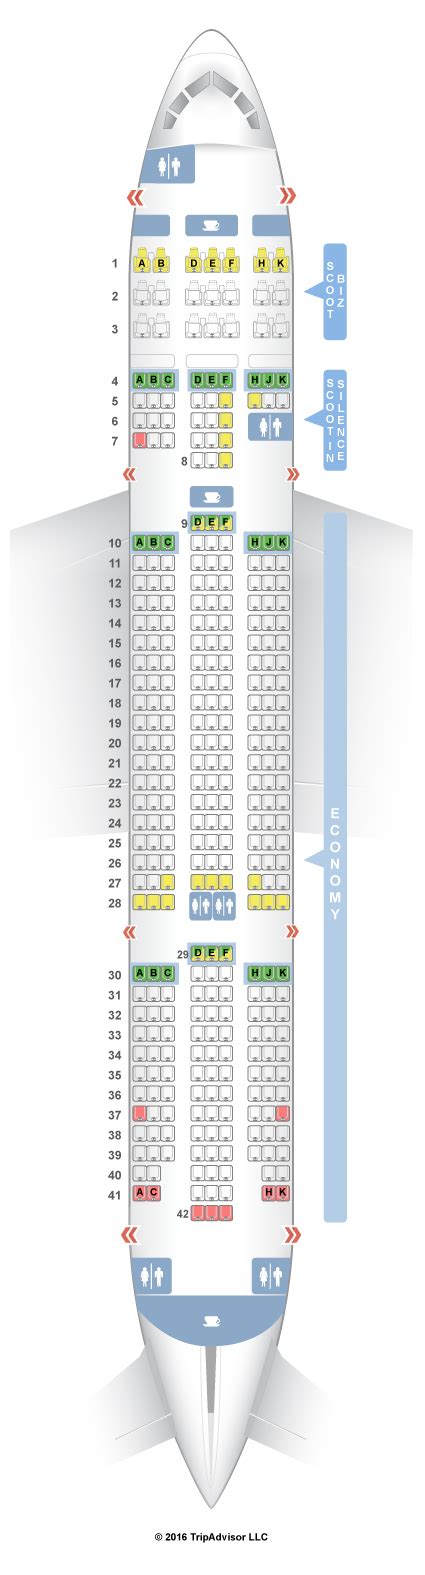 Seatguru Seat Map Scoot Airlines Boeing 787 800 788